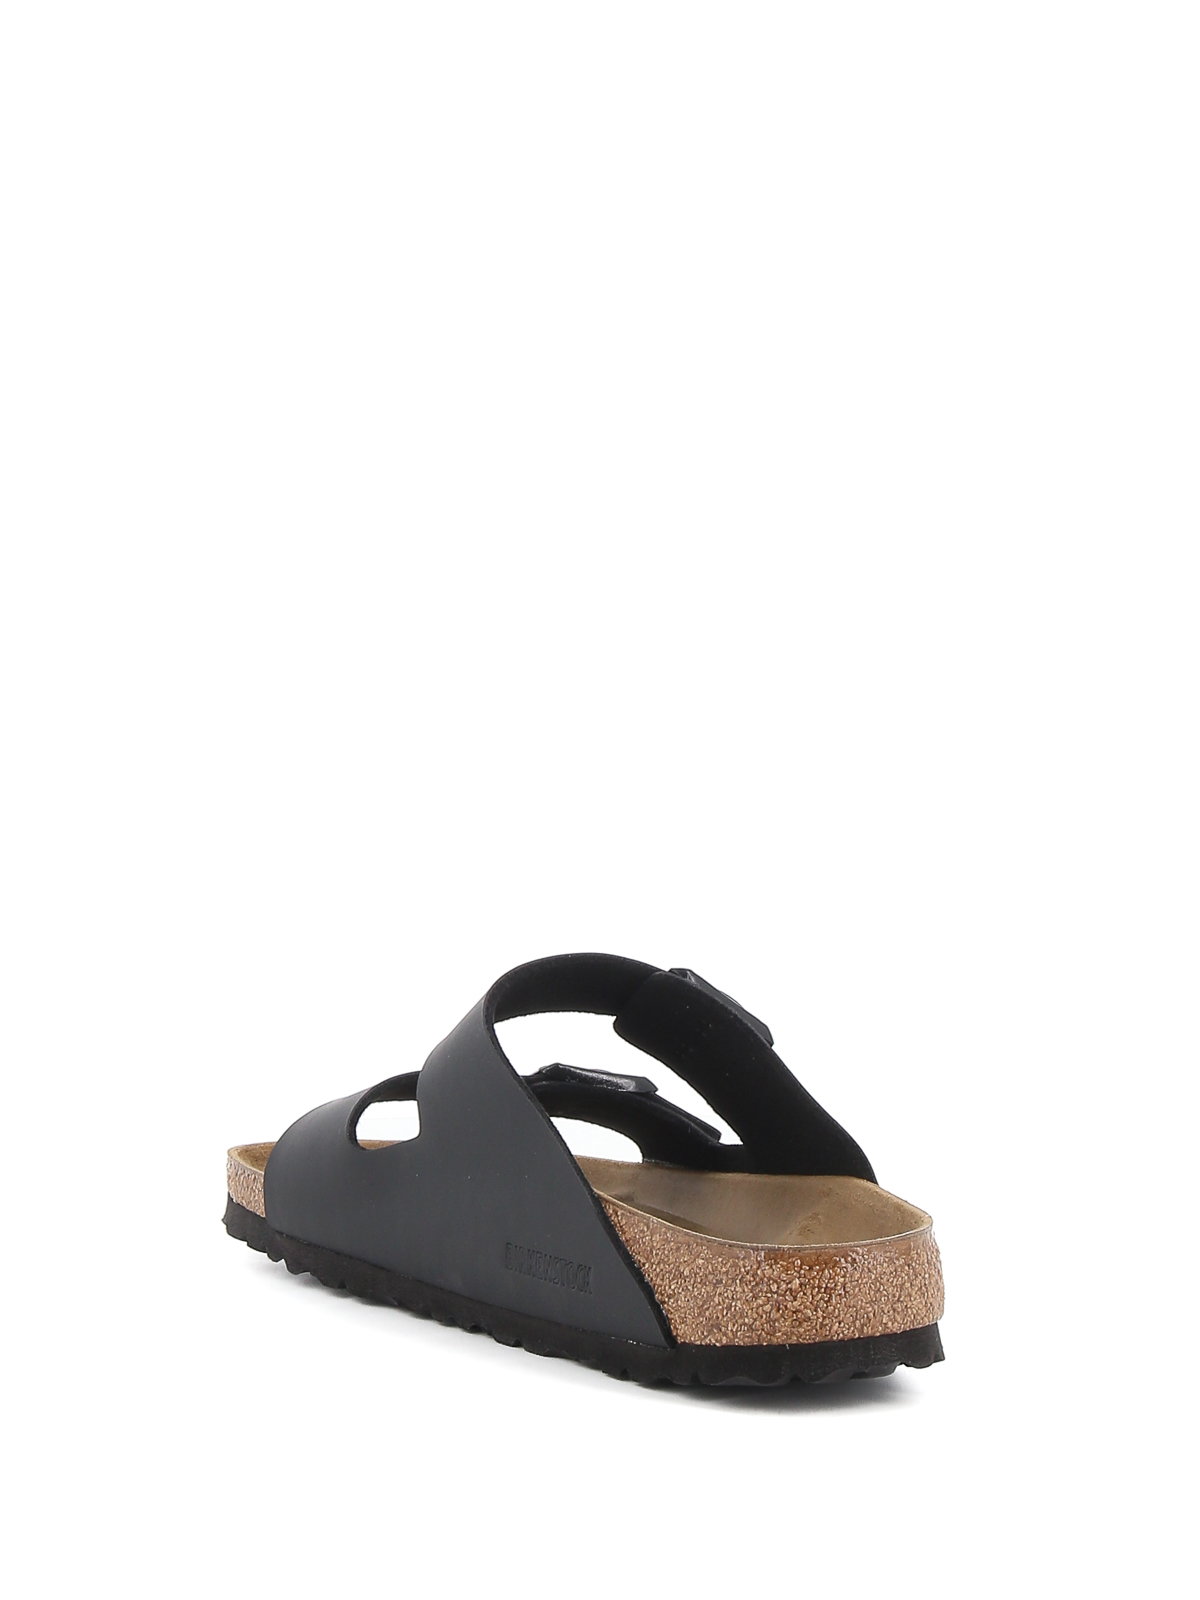 Ramkoers Uitstekend Vleugels Sandals Birkenstock - Arizona Bs sandals - 0051793 | Shop online at iKRIX